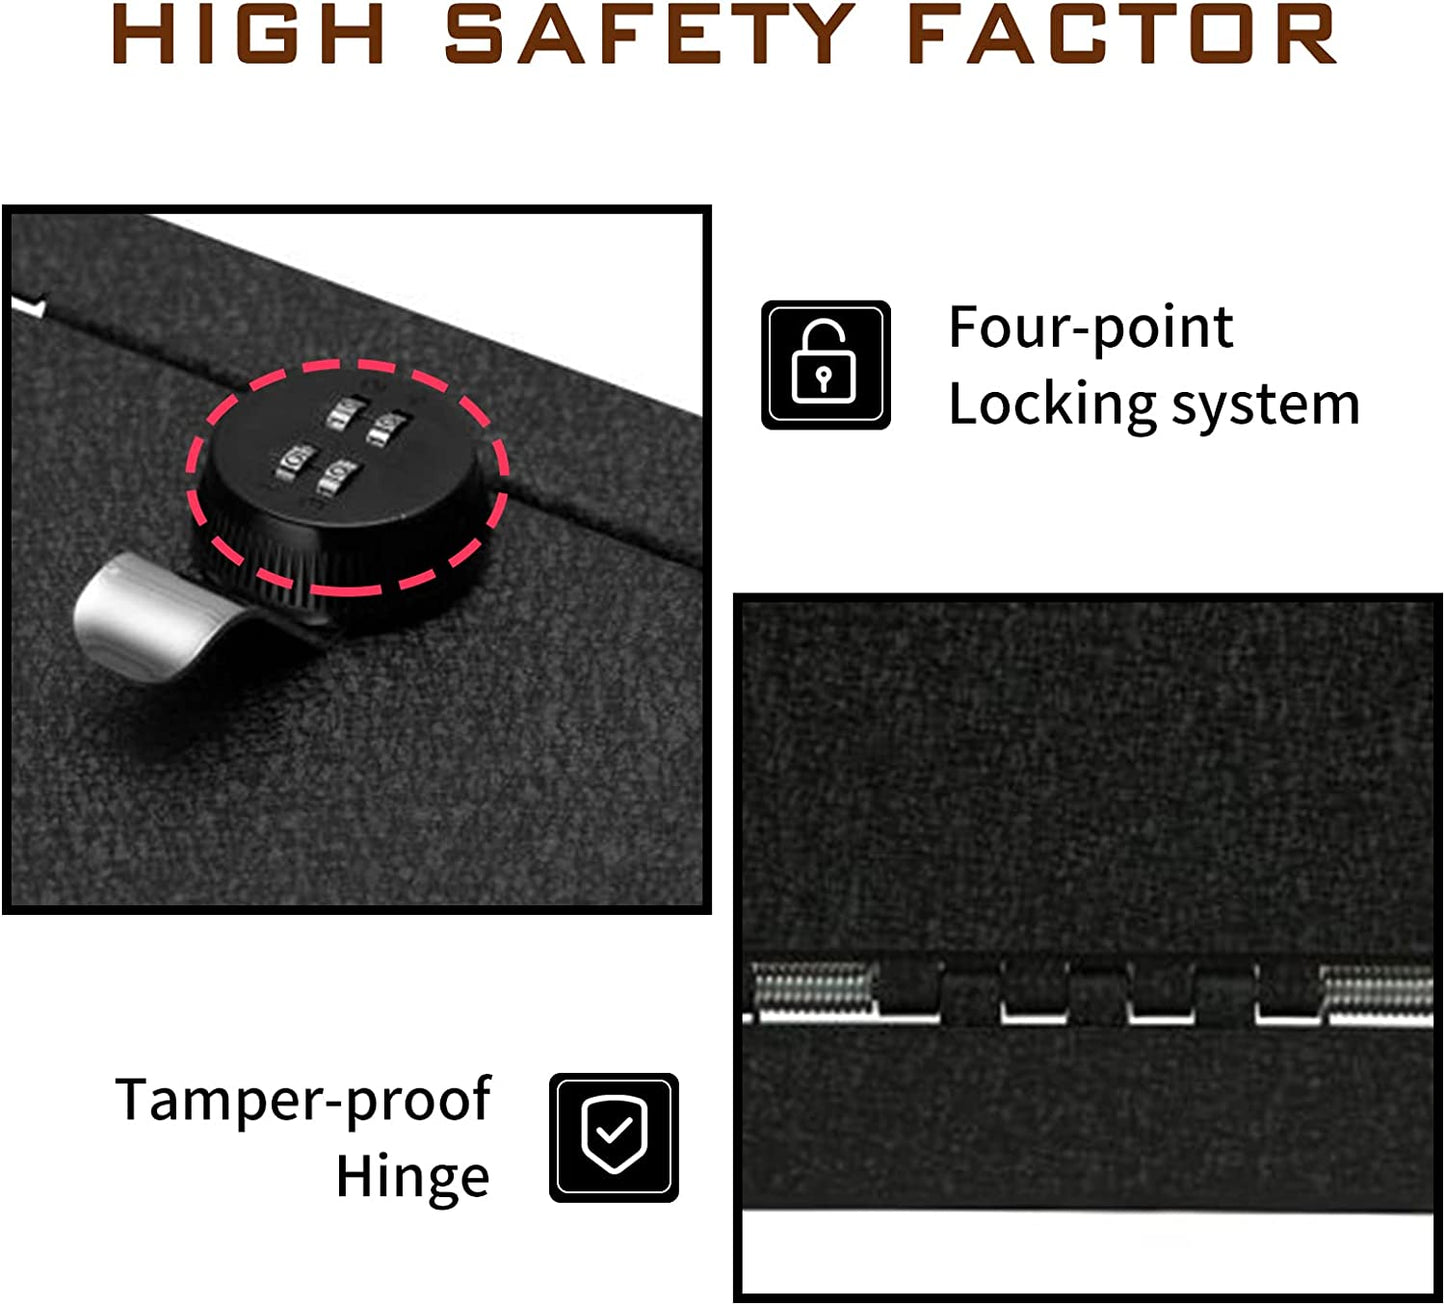 Center Console Safe Gun Safe for 2012-2014 Ford F150, Raptor and Platinum, 4-Digit Combo Lock